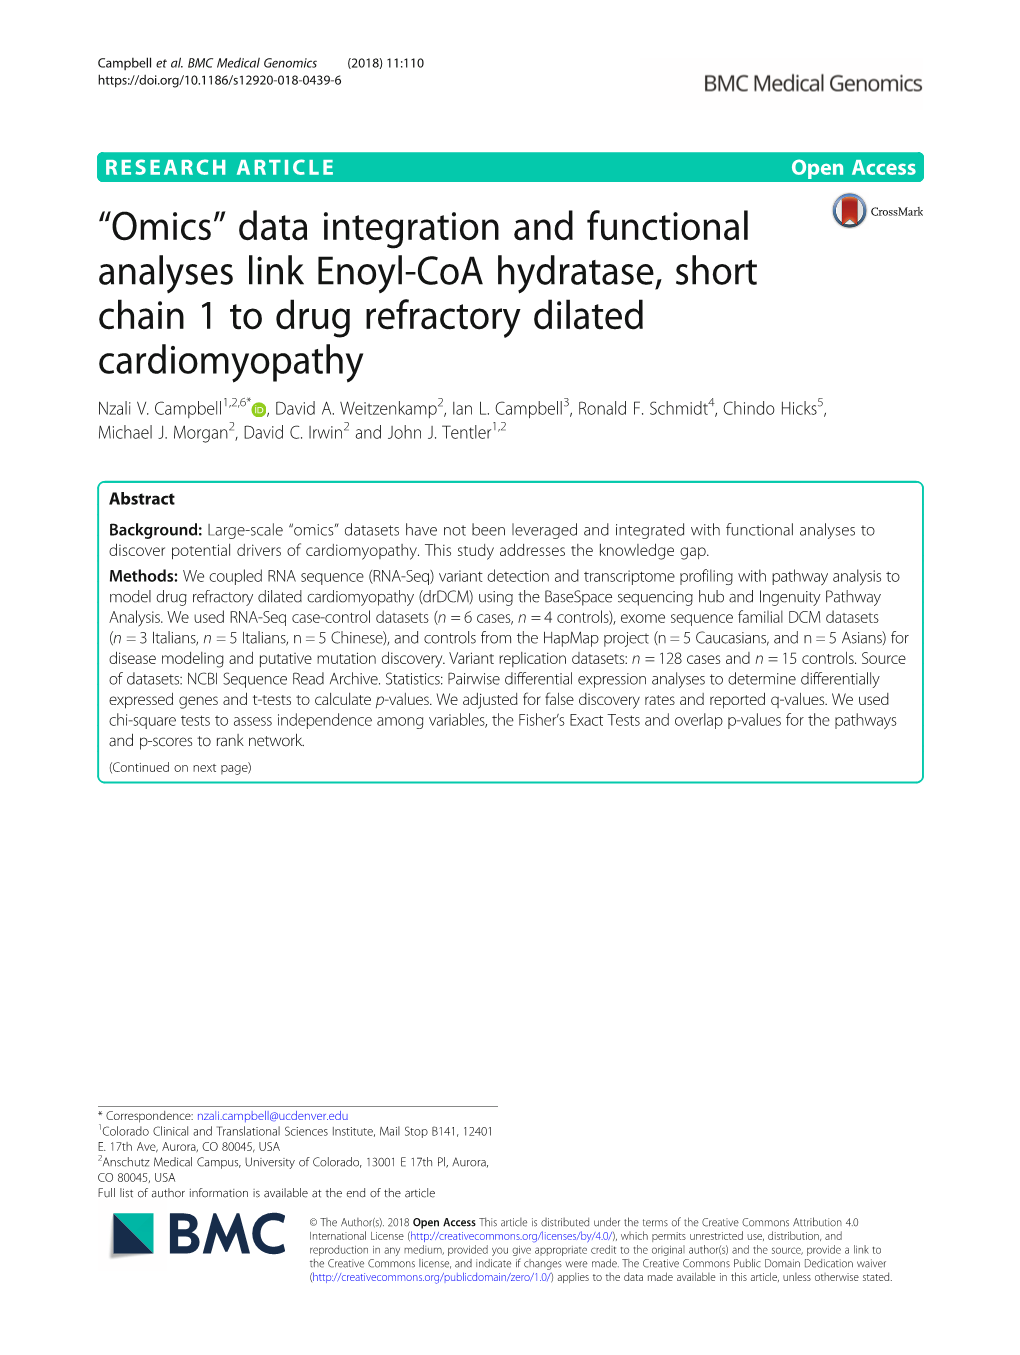 “Omics” Data Integration and Functional Analyses Link Enoyl-Coa Hydratase, Short Chain 1 to Drug Refractory Dilated Cardiomyopathy Nzali V